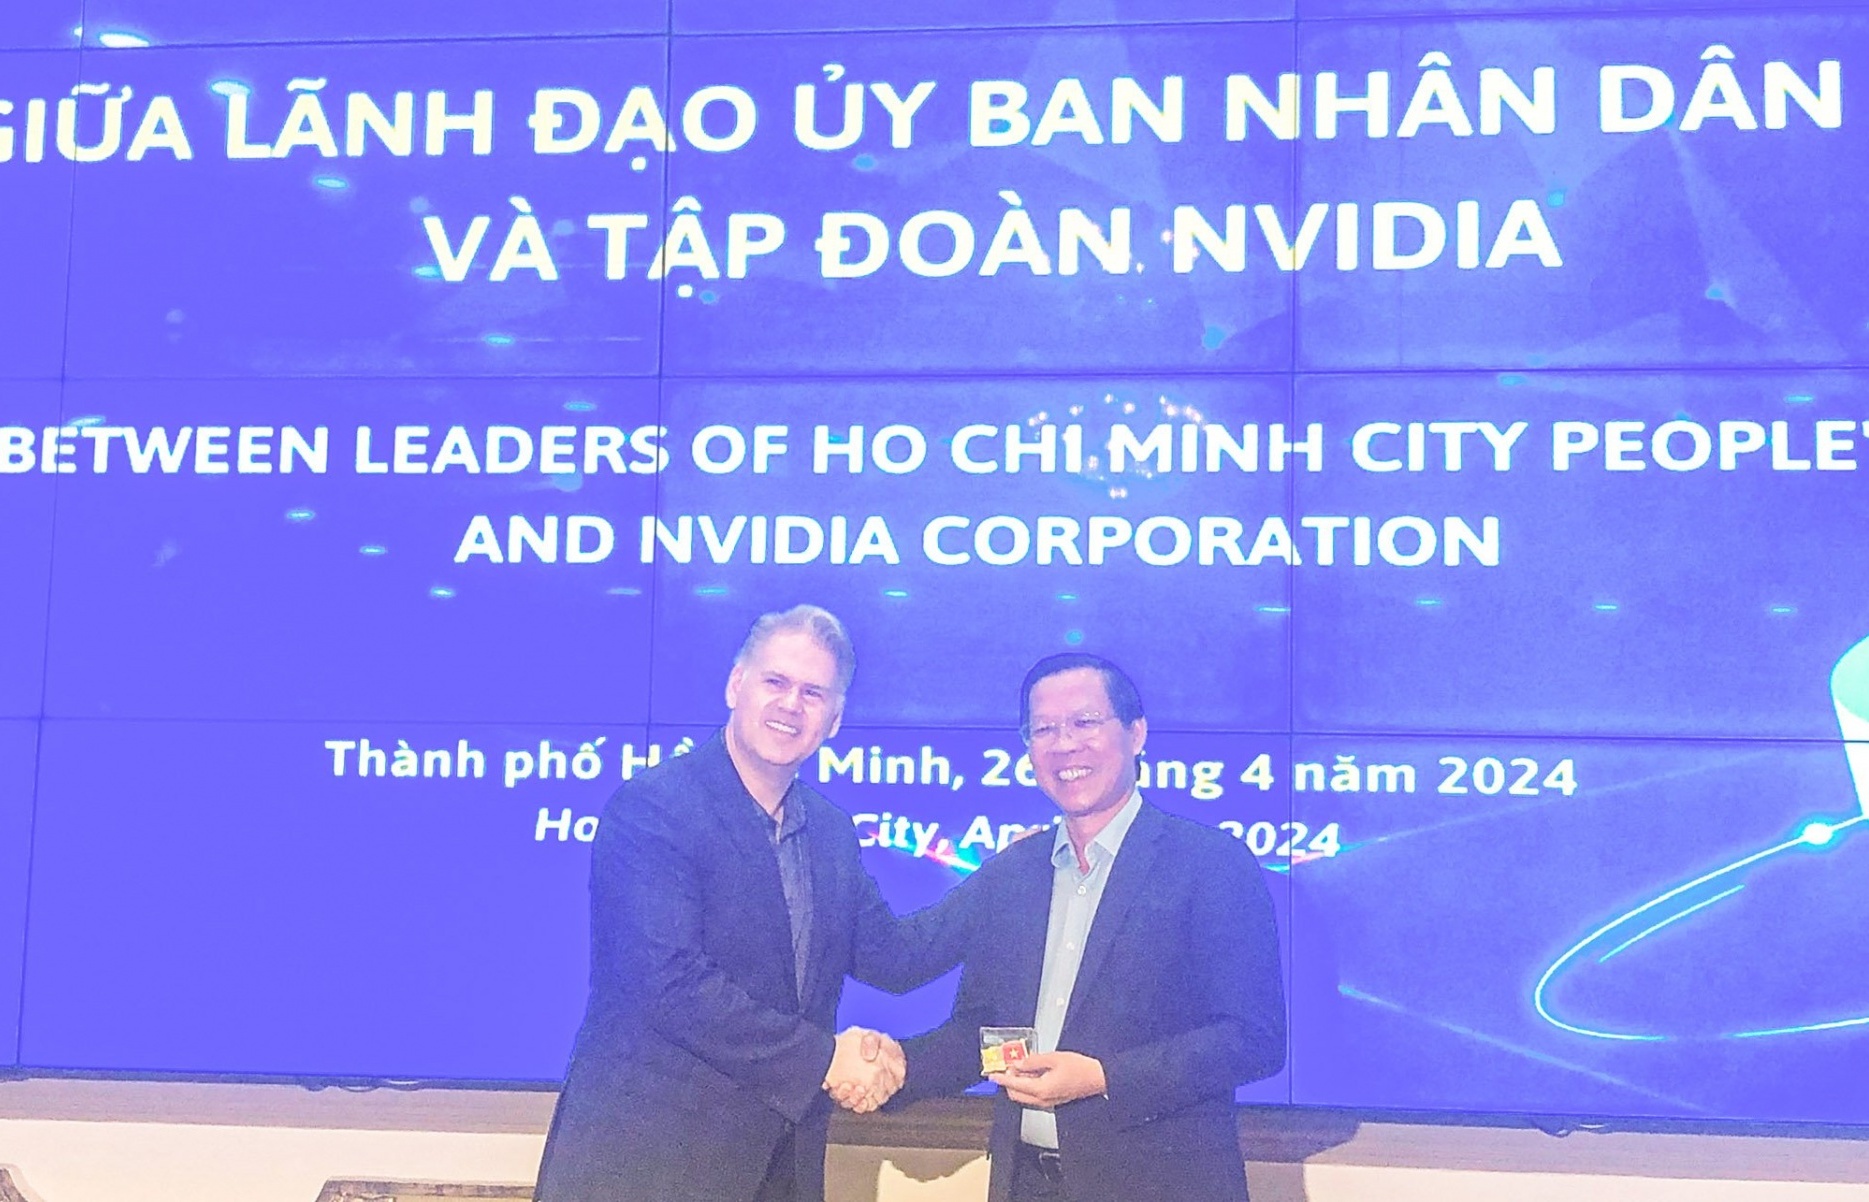 Nvidia Group may build an AI centre in Ho Chi Minh City